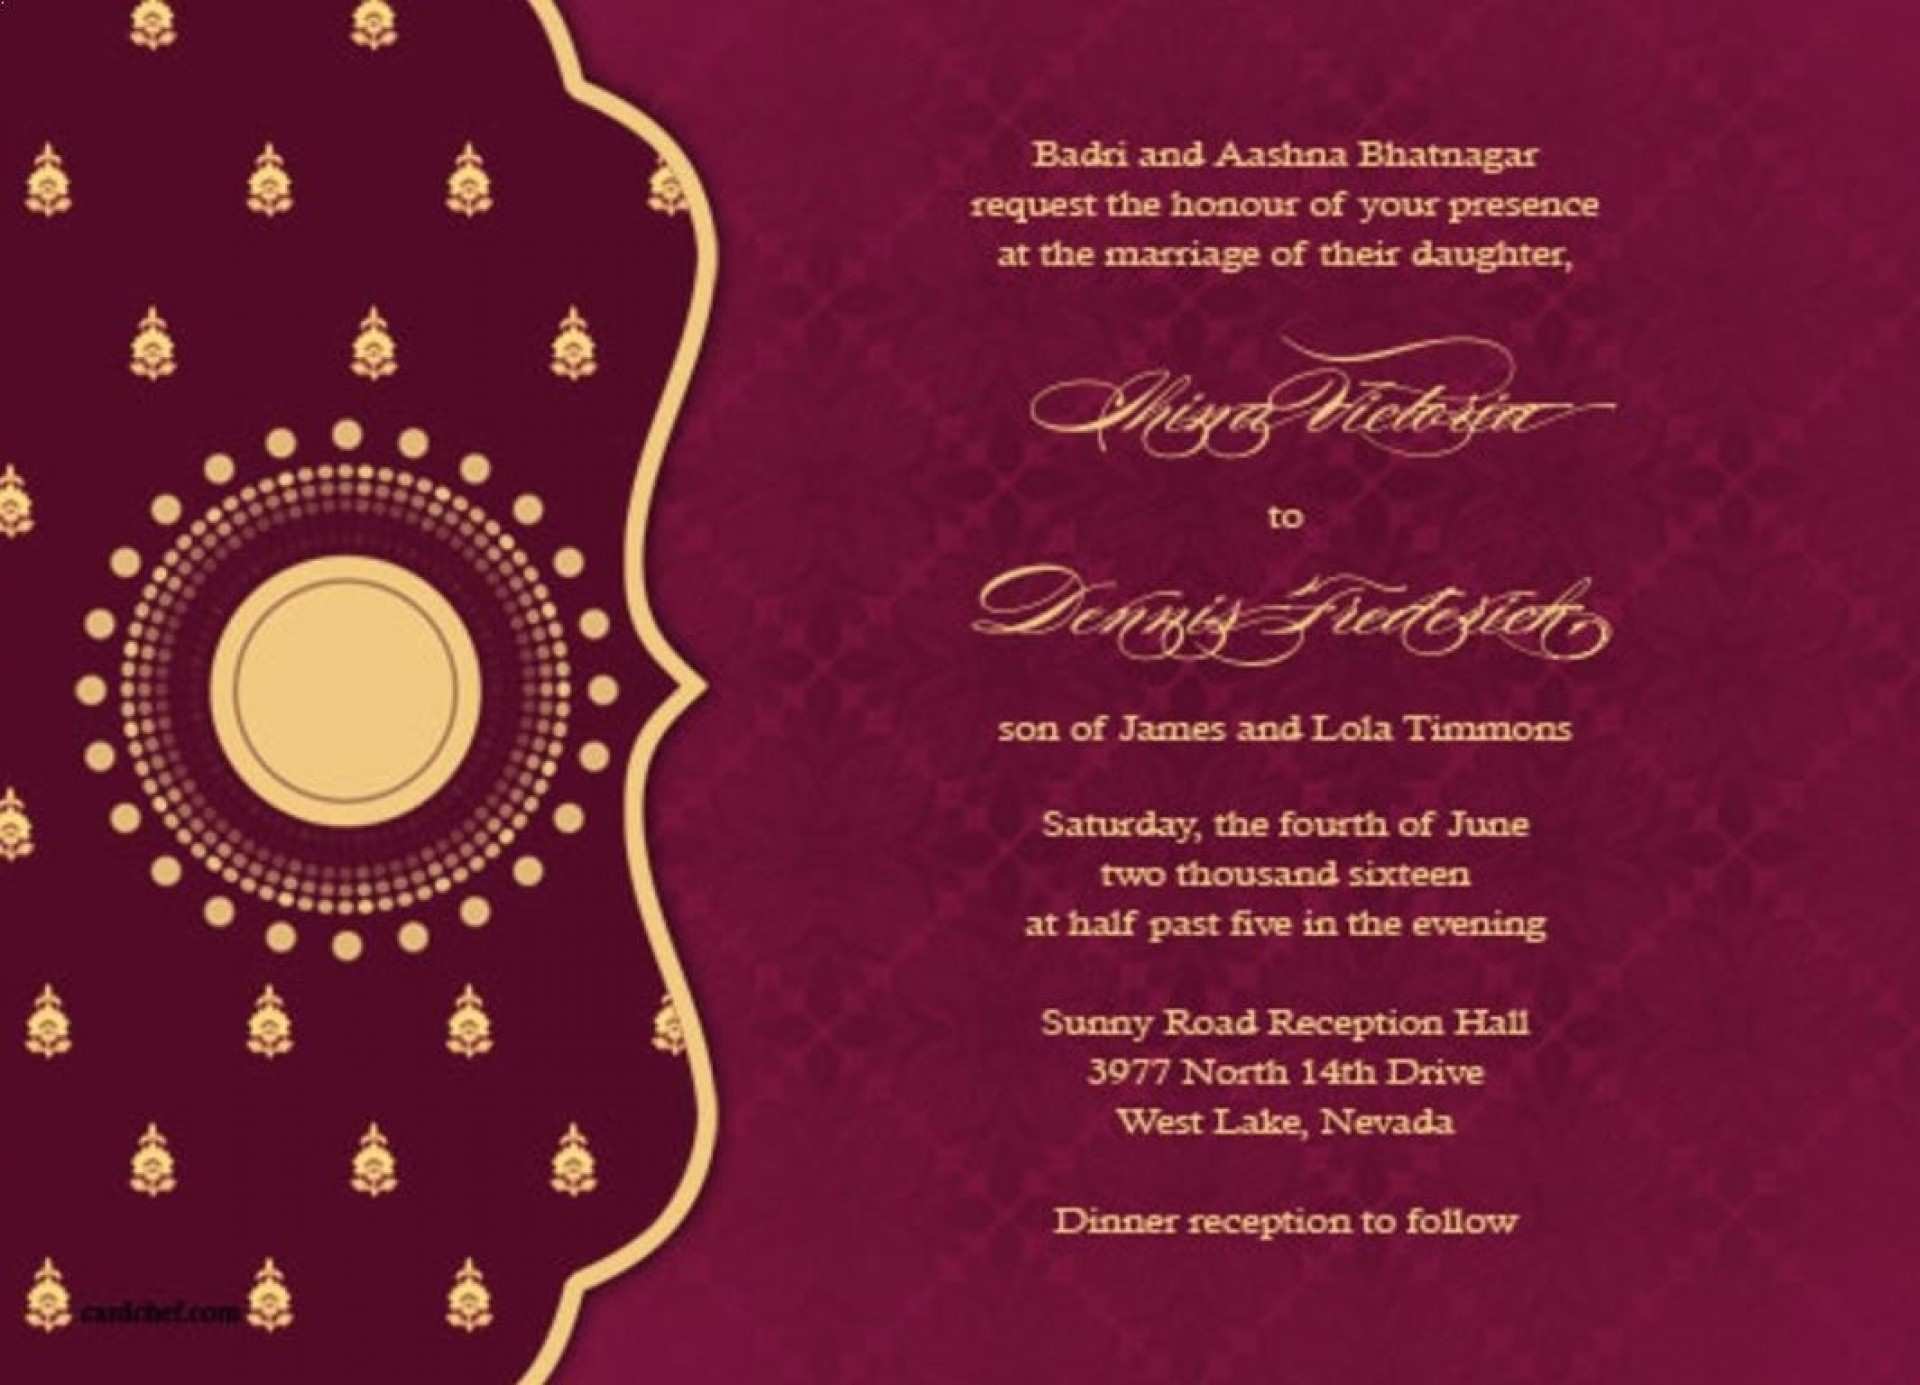 16 Customize Wedding Card Templates Free Download Indian For Free By Wedding Card Templates Free Download Indian Cards Design Templates